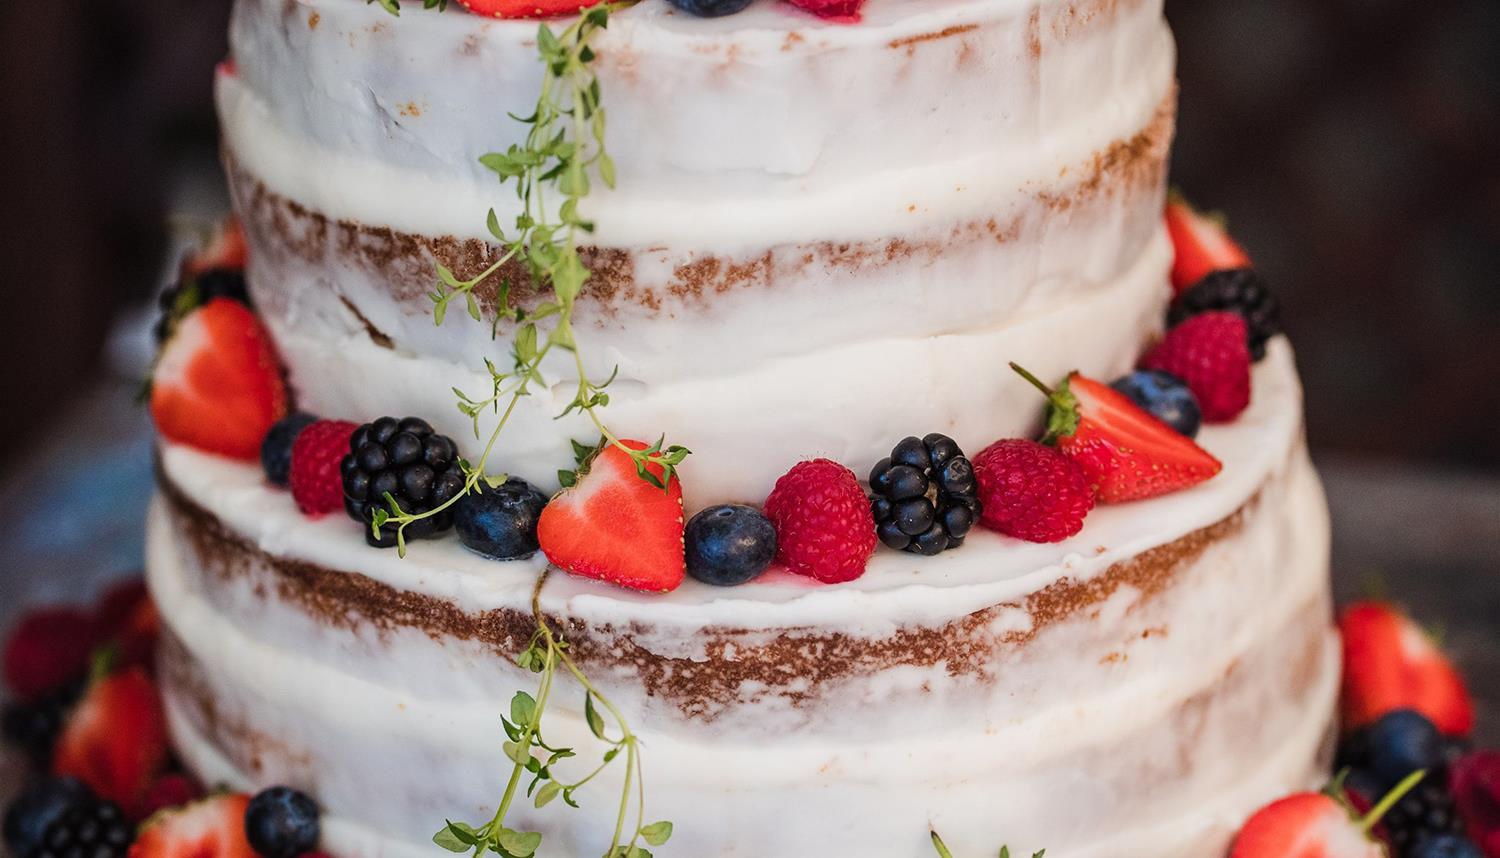 Cake with fruit. Photo Credit: Berni Palumbo Photography